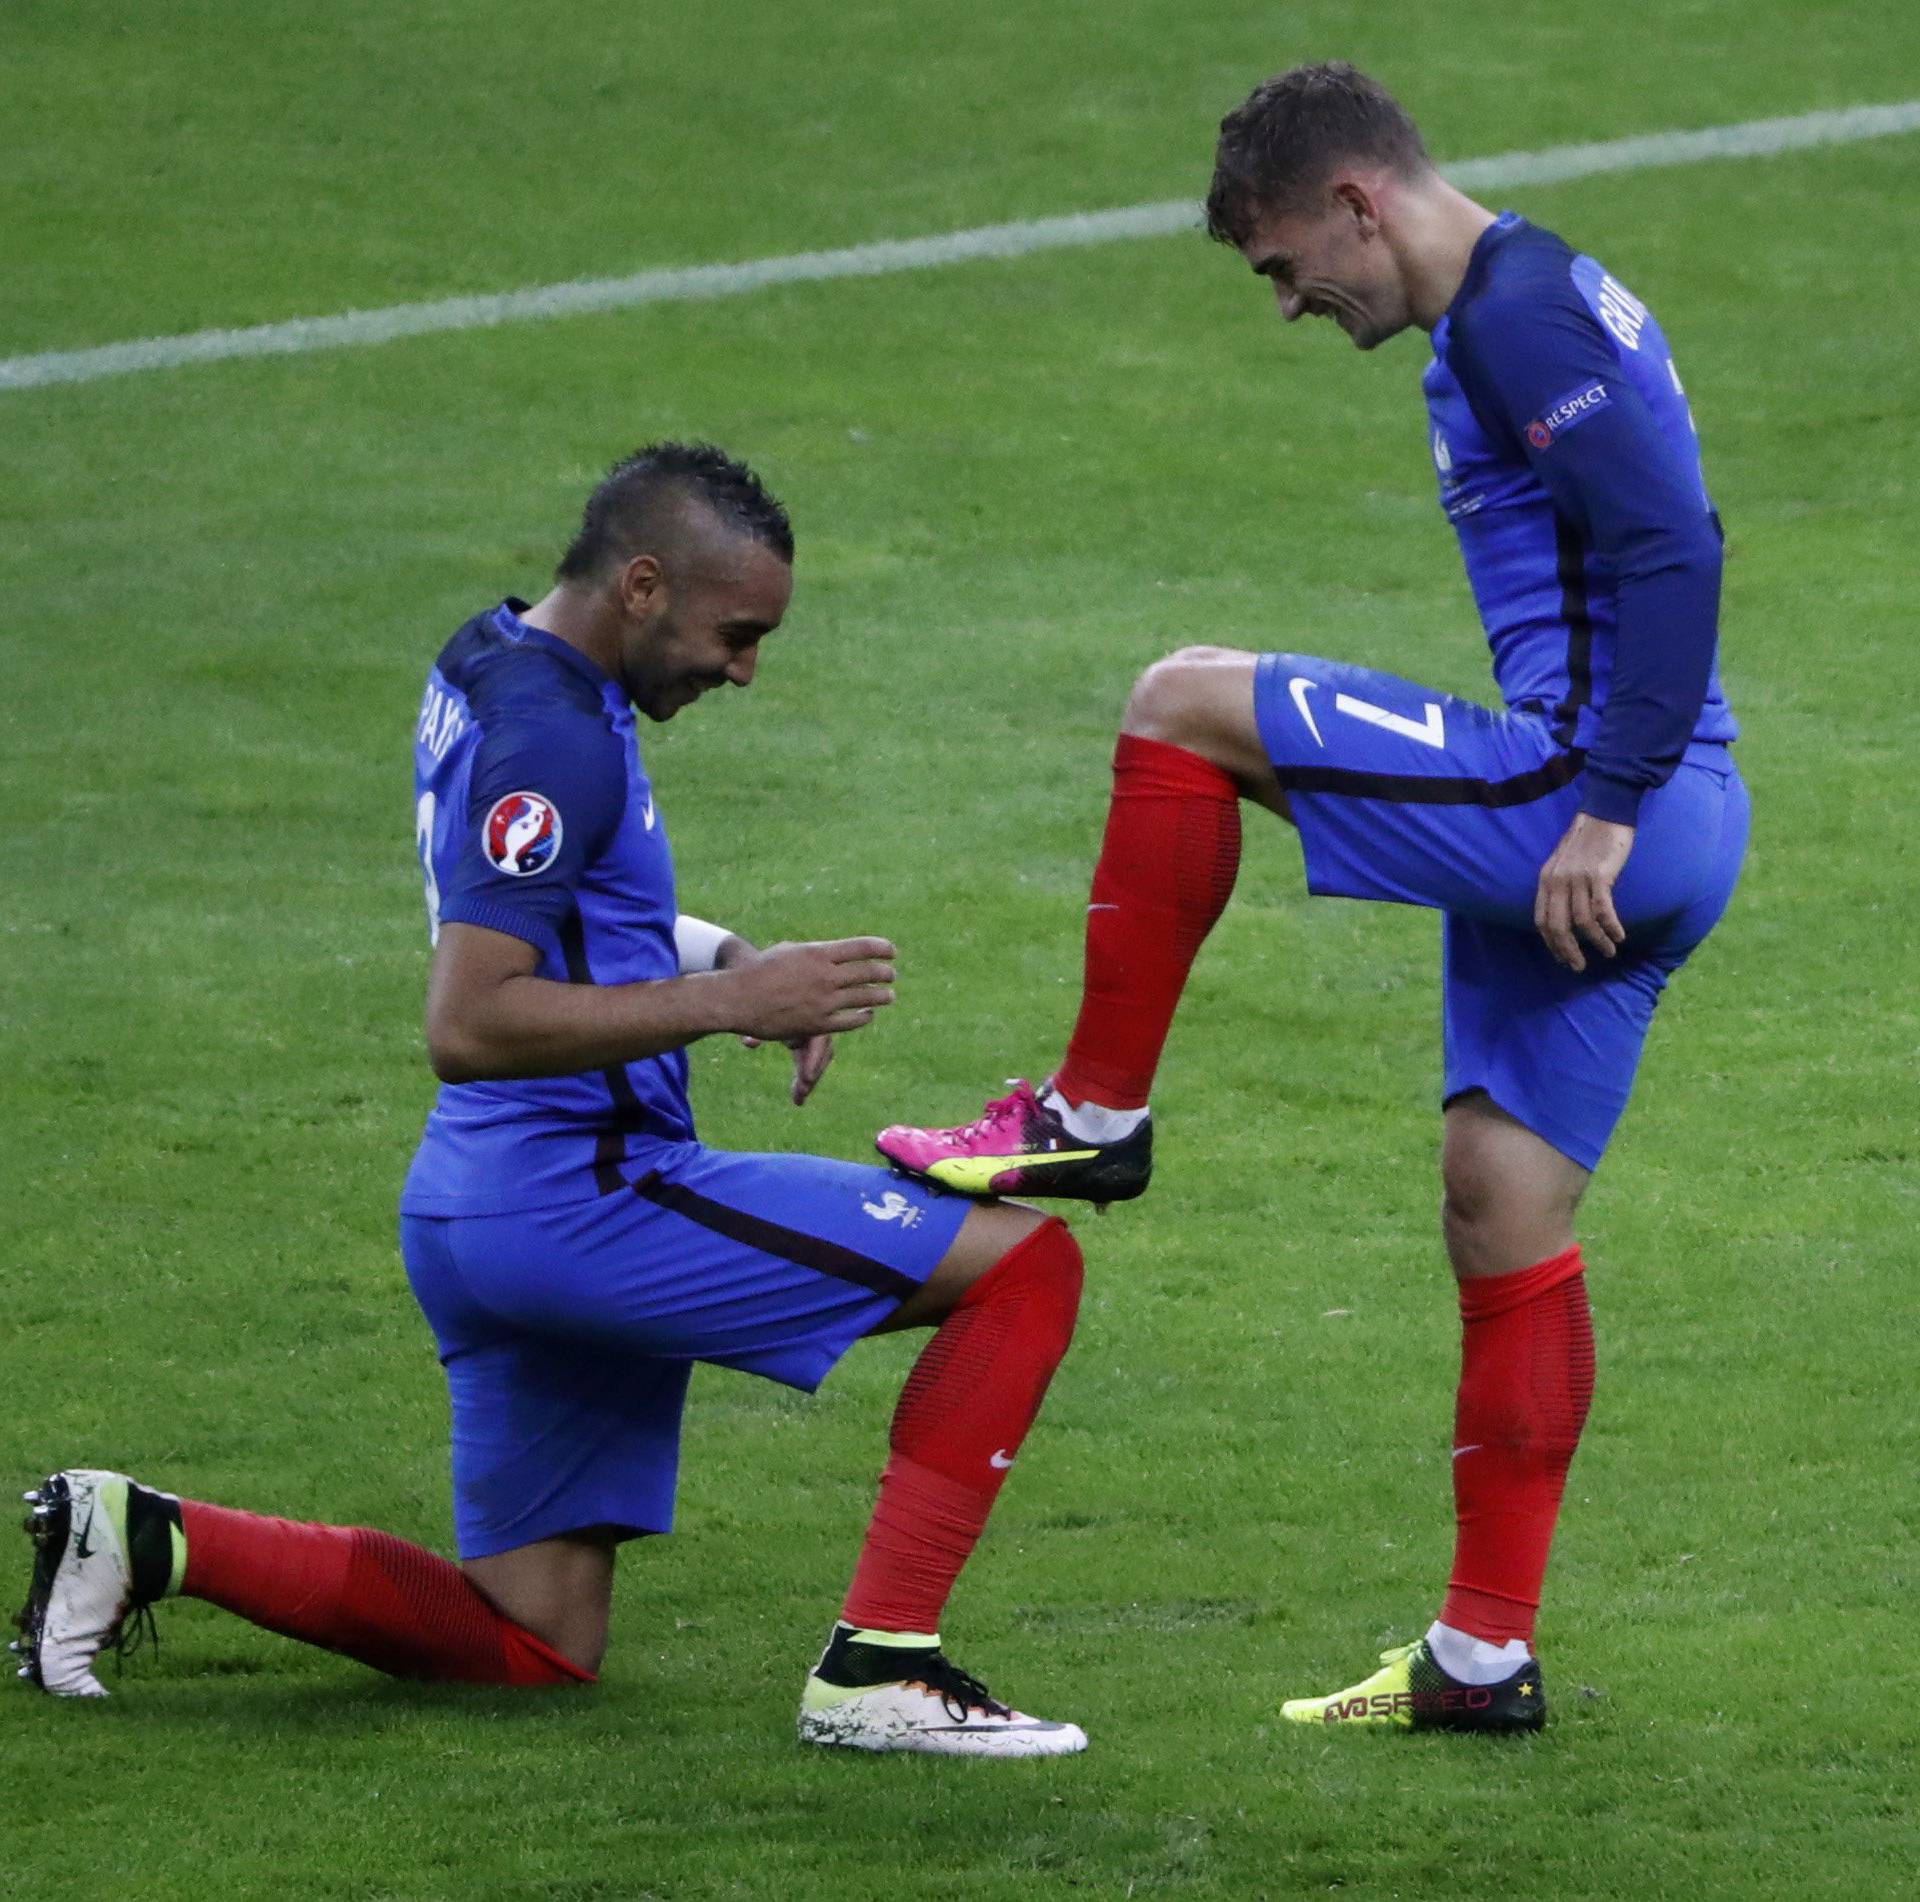 France v Iceland - EURO 2016 - Quarter final